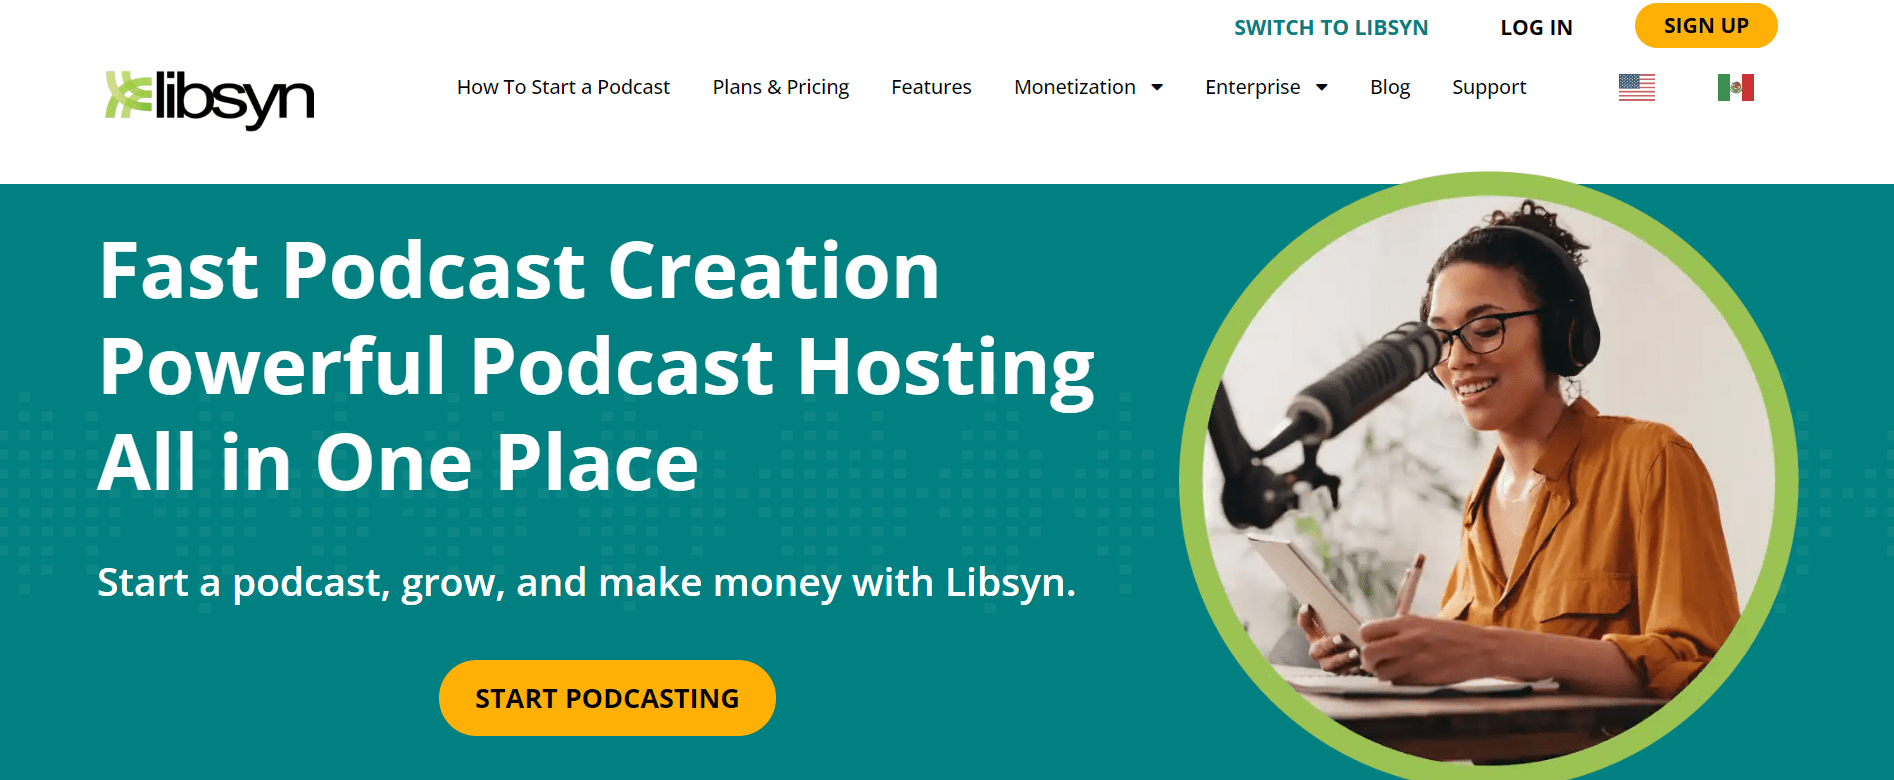 Libsyn - Best Podcast Hosting Provider